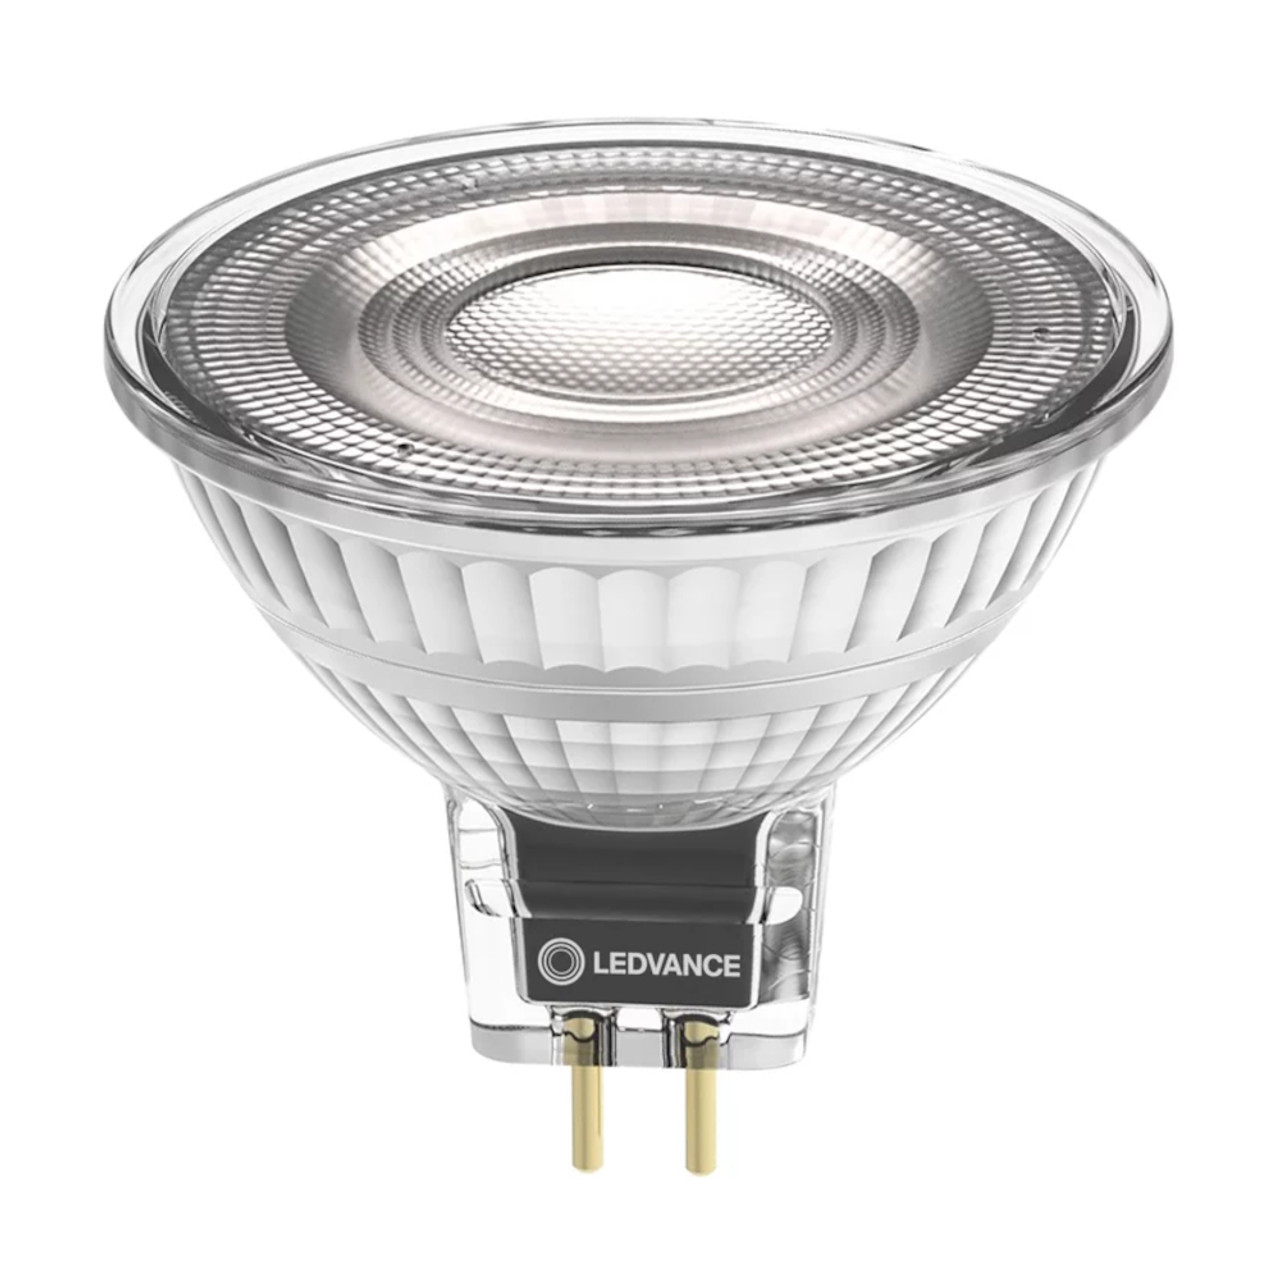 Ledvance LED MR16 5W (35W eq.) 12V 2700K 36 Degrees RA90 Dimmable